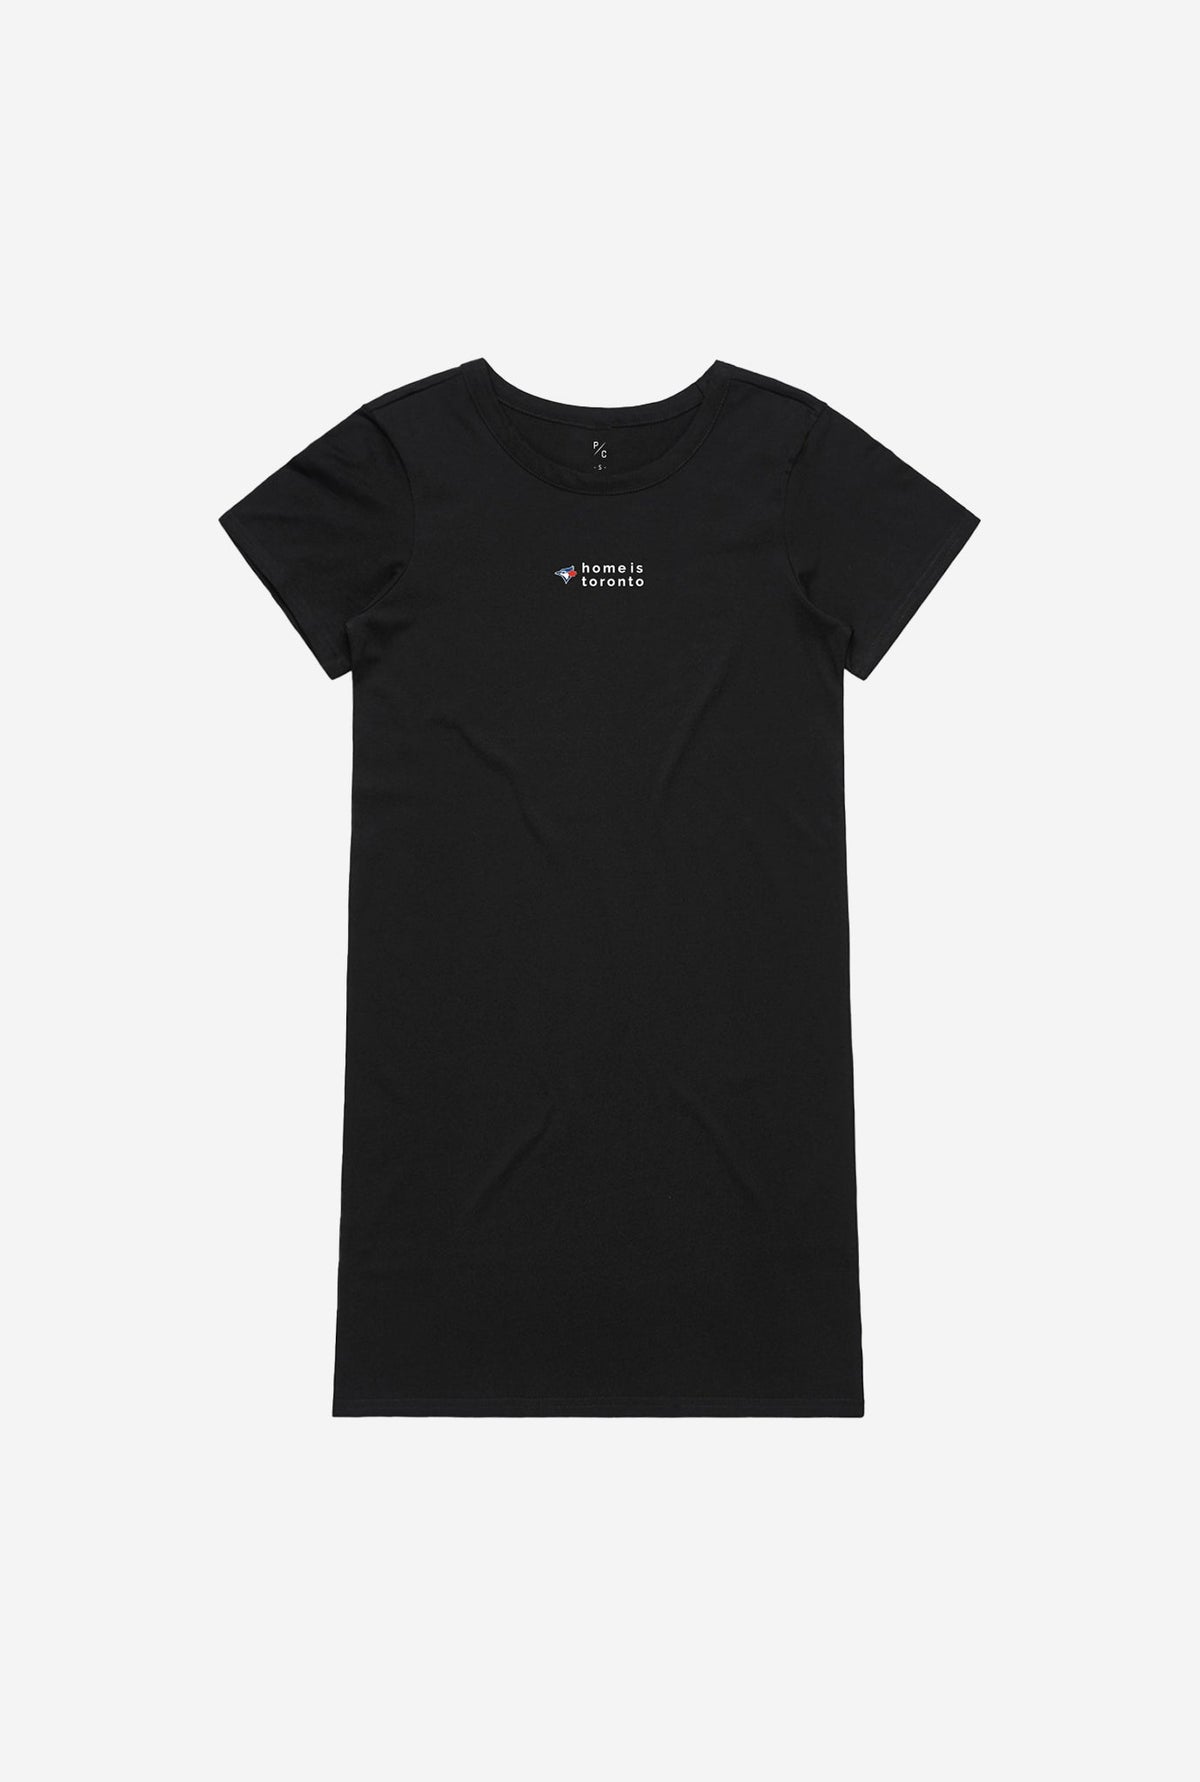 Toronto Blue Jays Home is Toronto T-Shirt Dress - Black